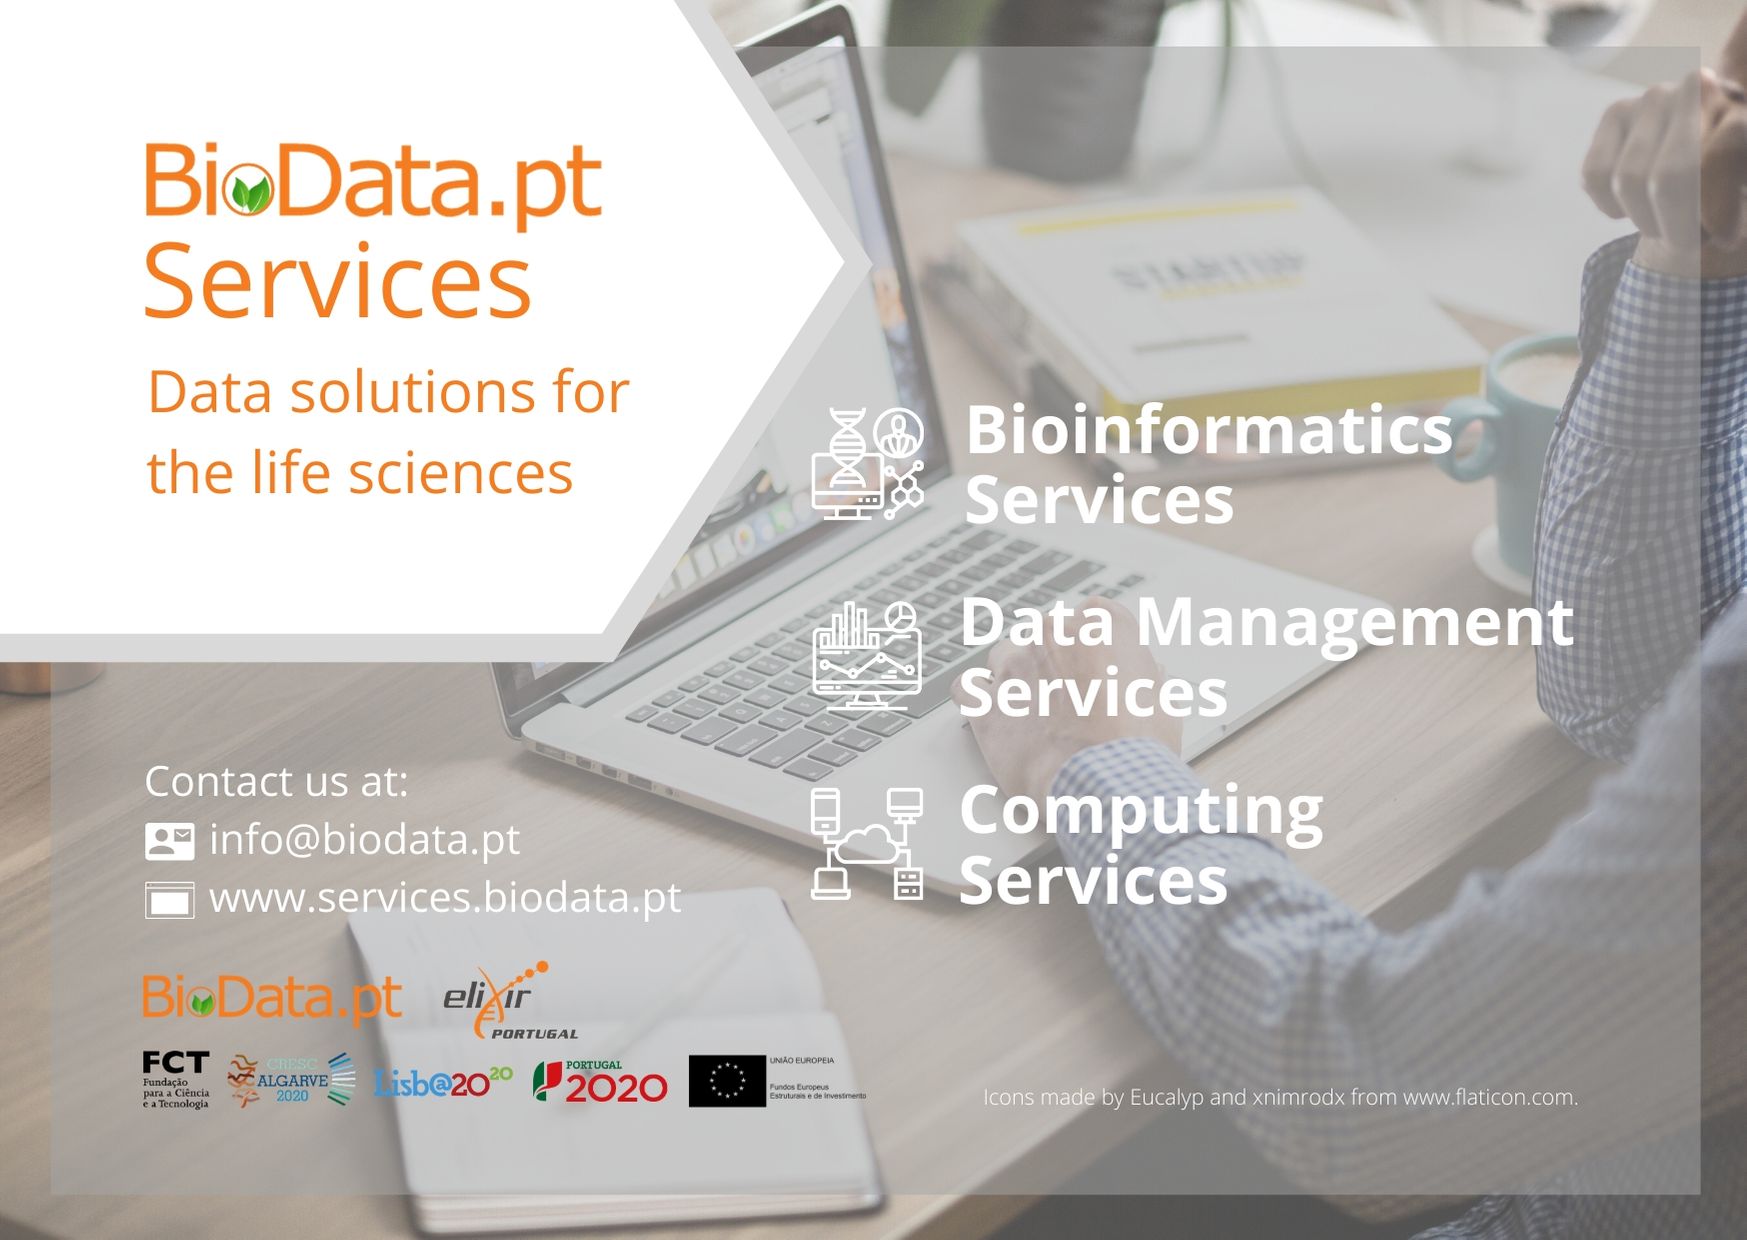 Image for BioData.pt Services